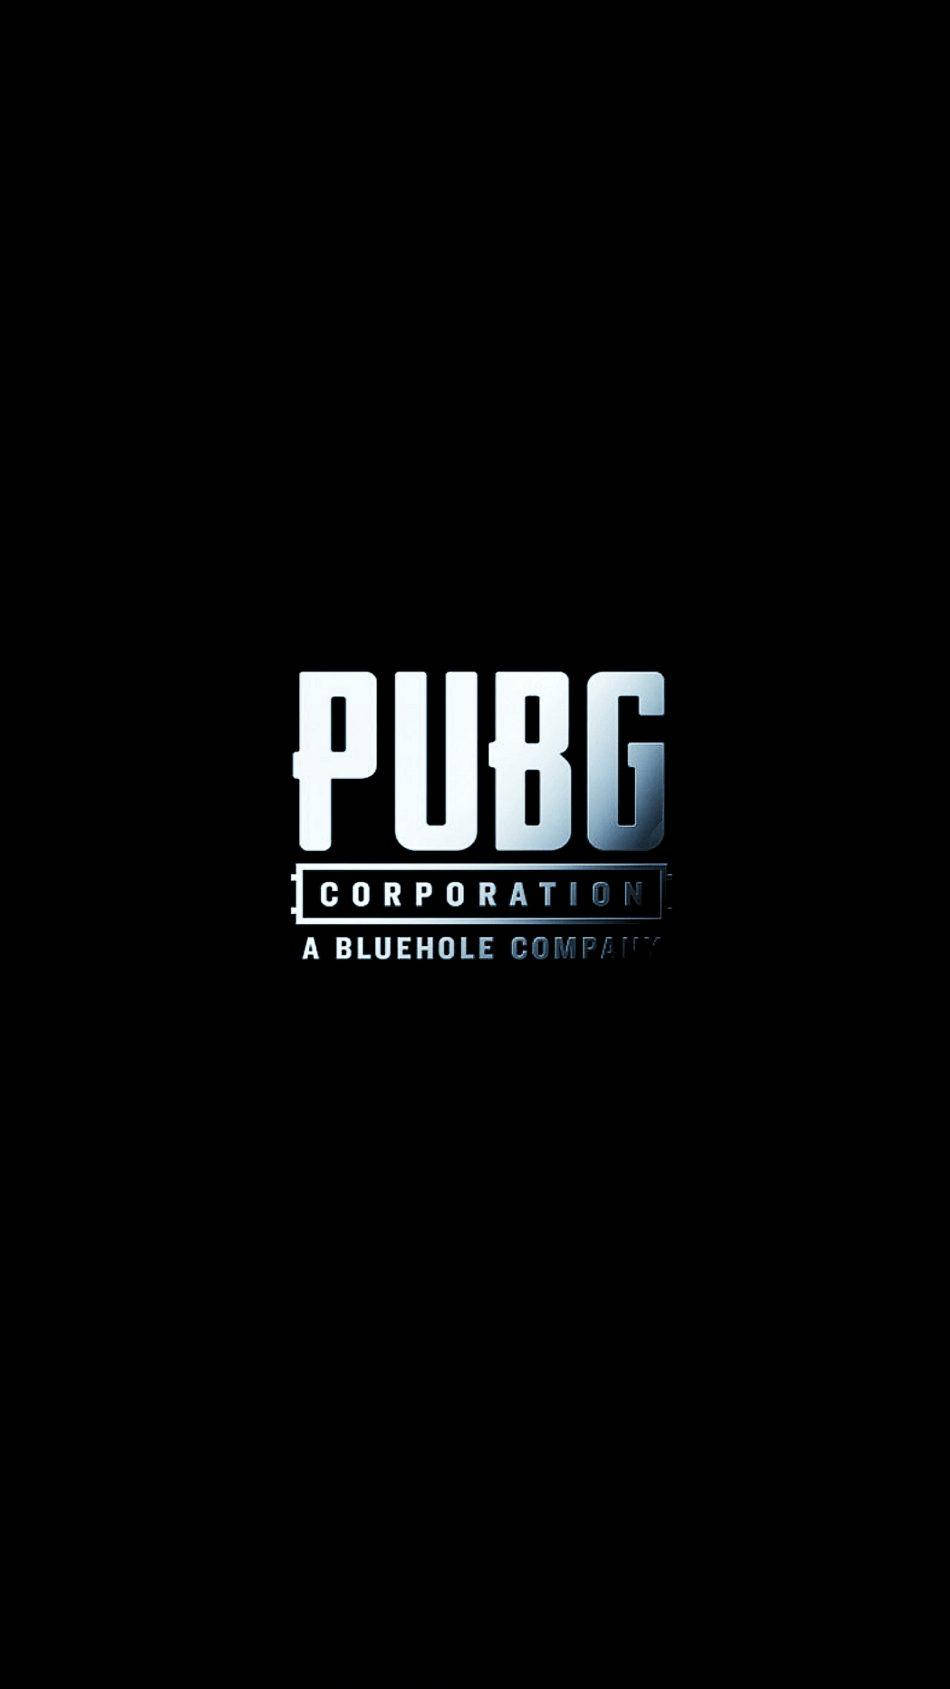 Corporation Pubg Logo Background